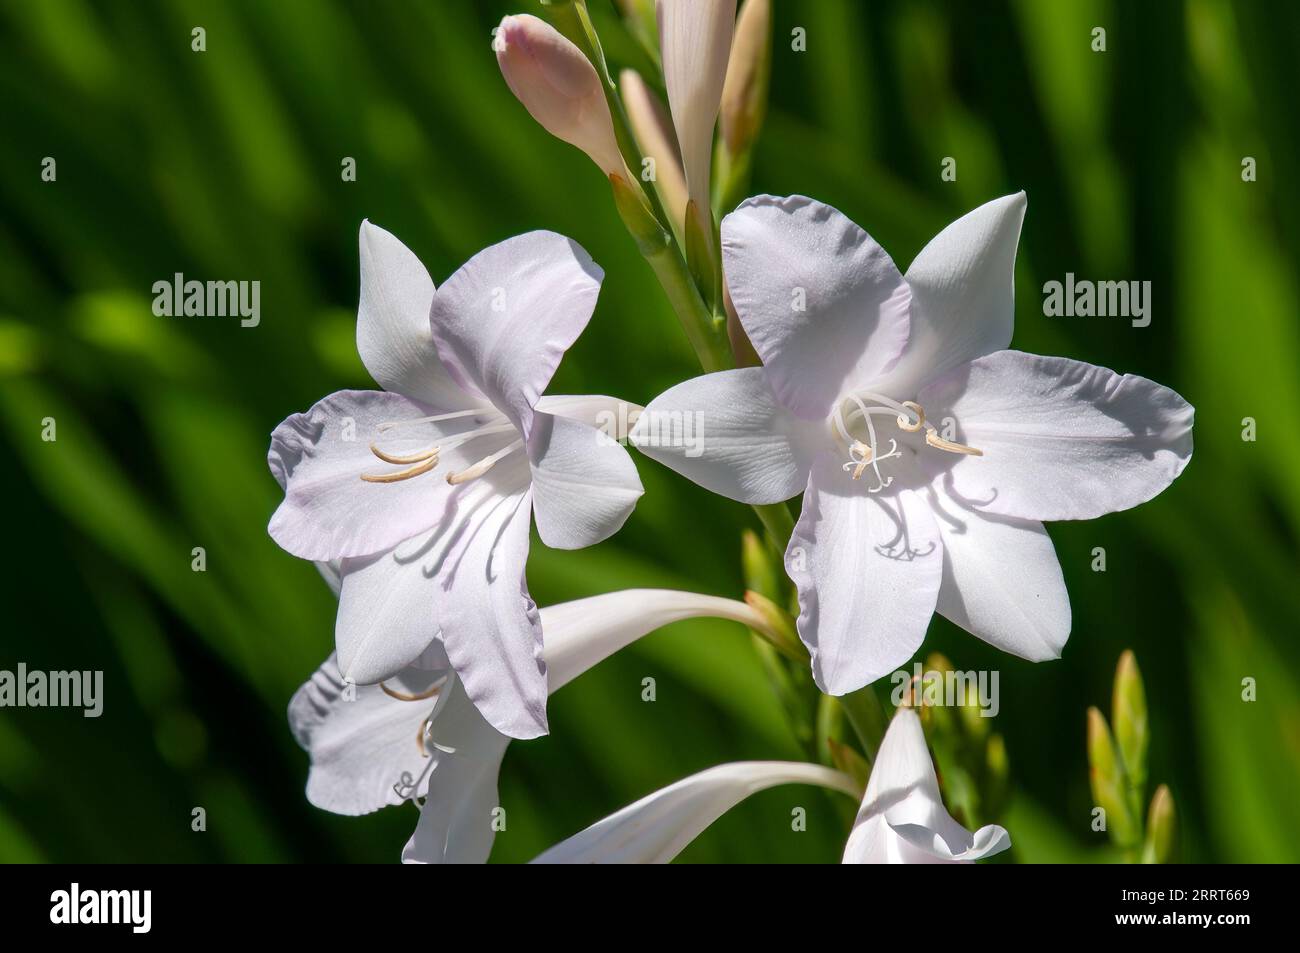 Sydney Australia, whitish flowers of a cape bugle lily Stock Photo